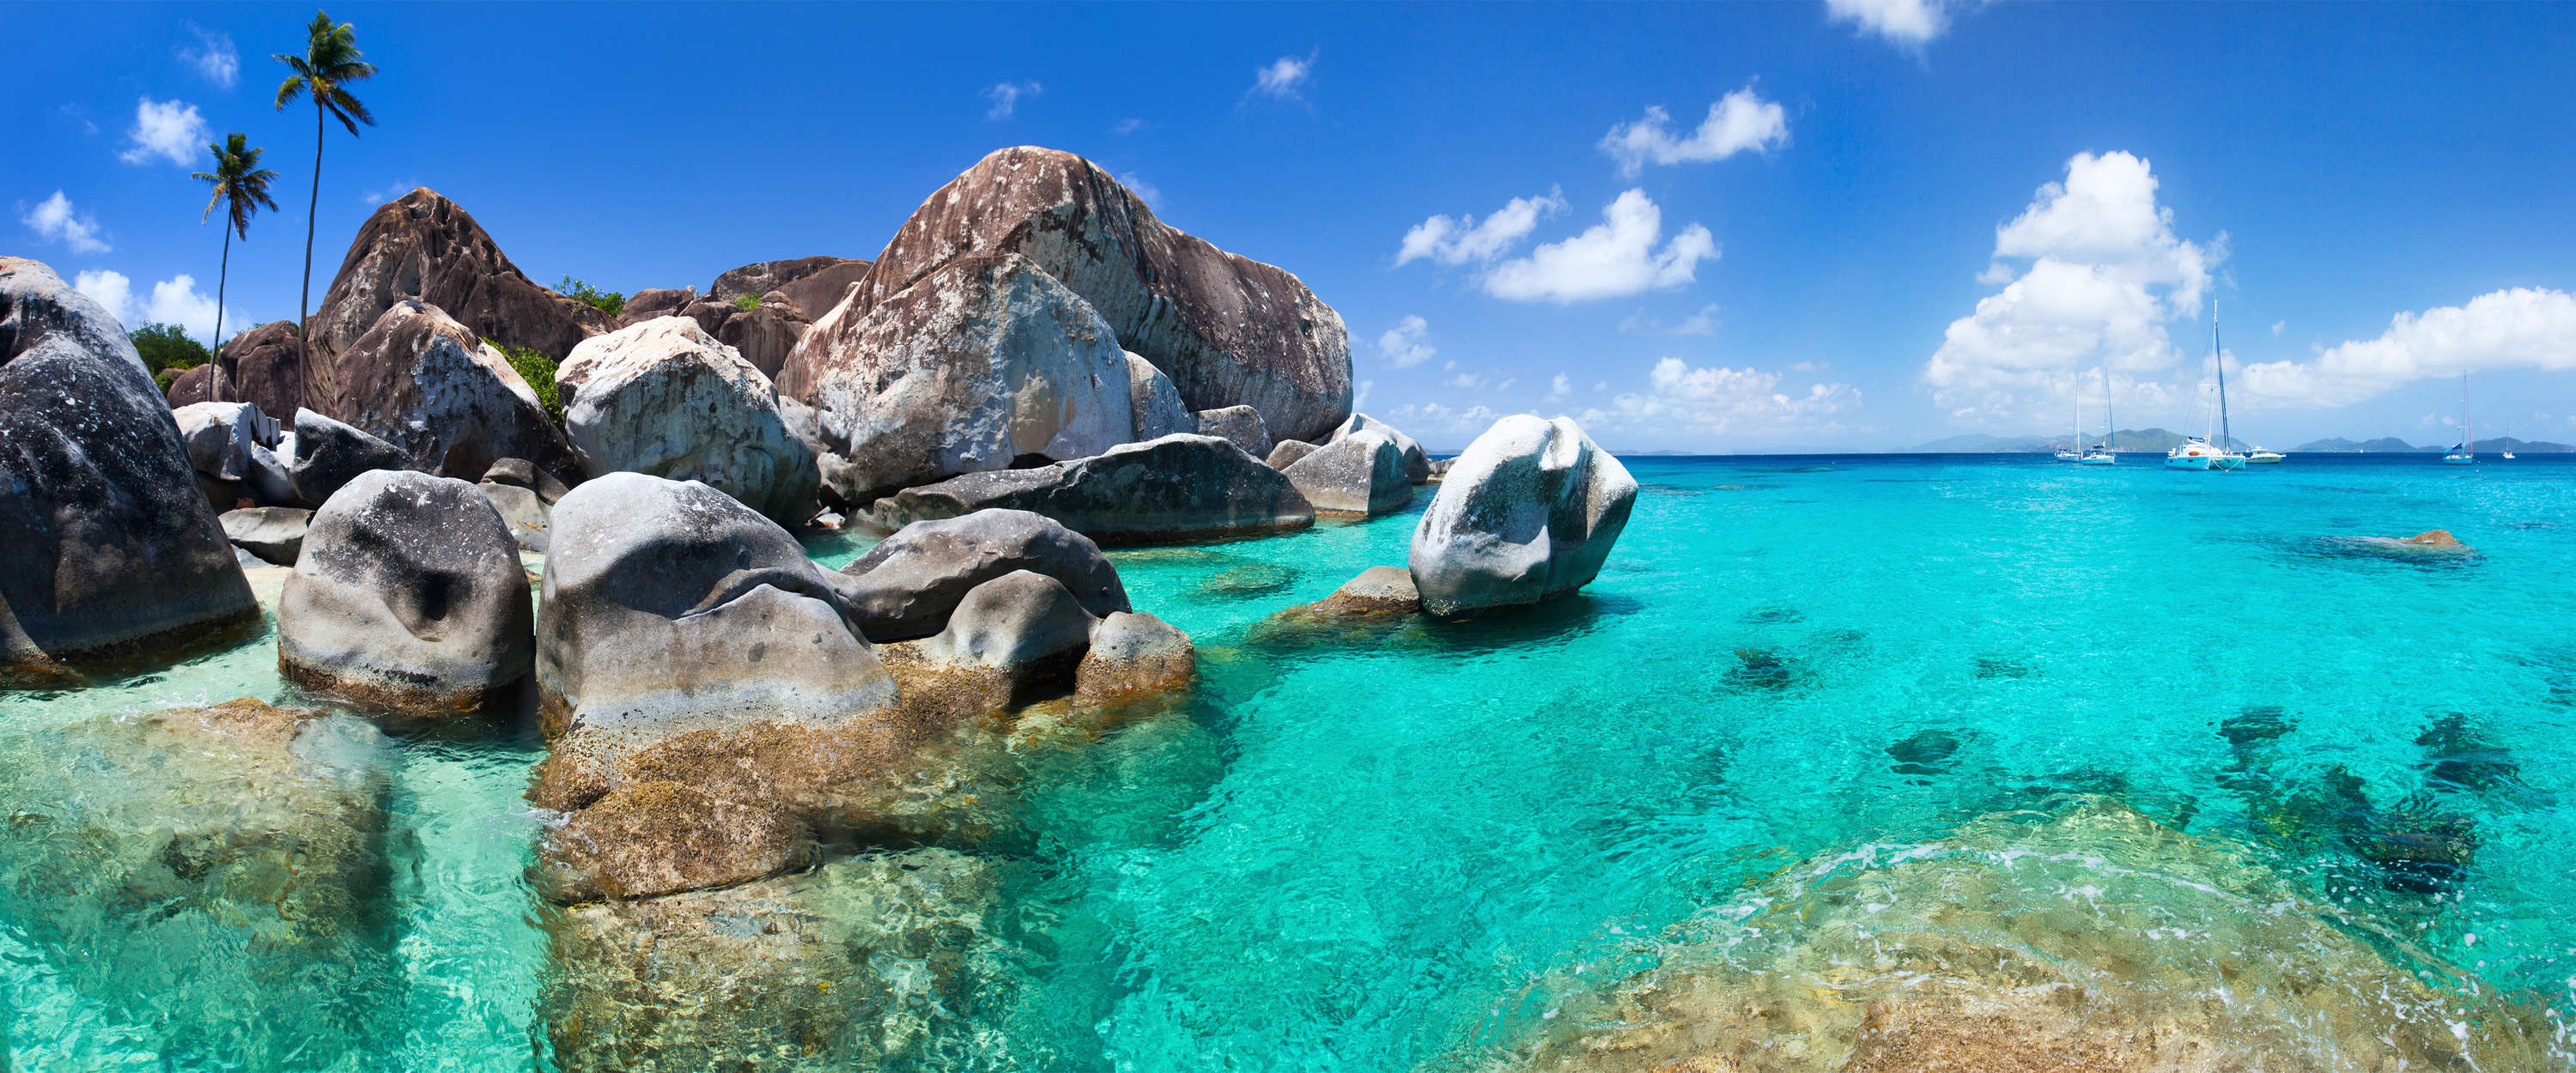             Fotomural Seychelles agua turquesa, rocas y palmeras
        